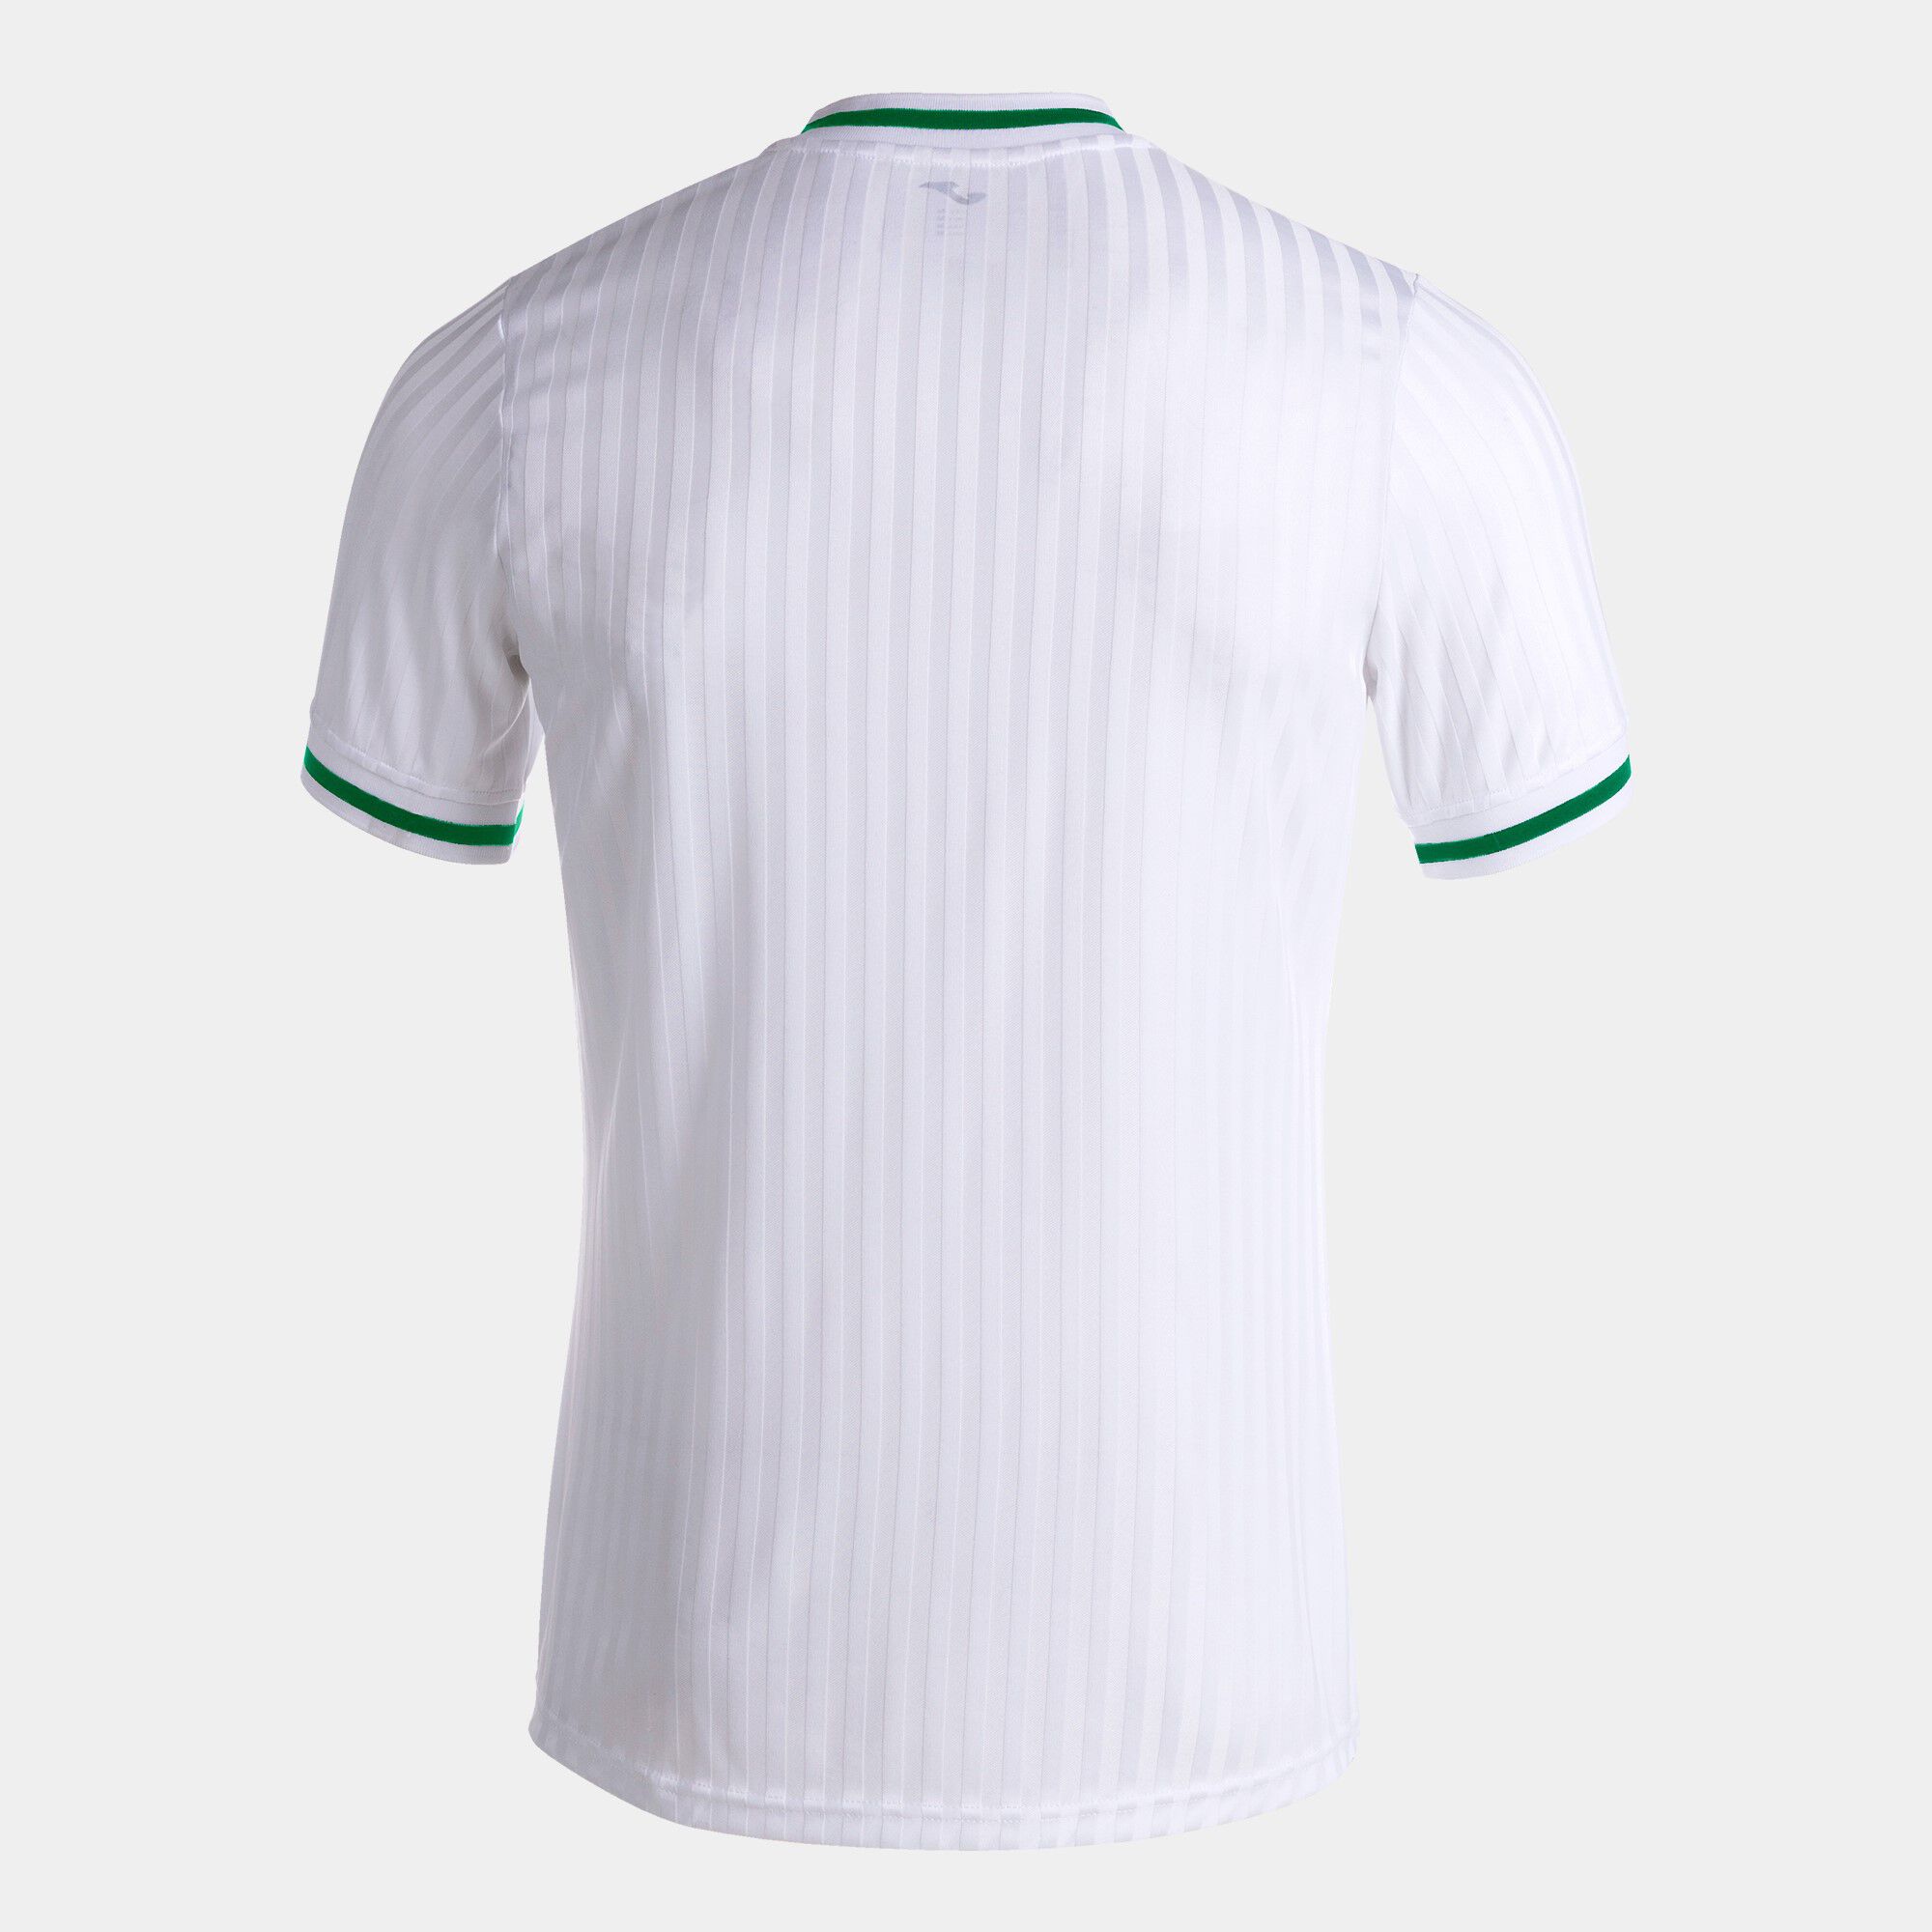 Camiseta manga corta hombre Toletum III blanco verde